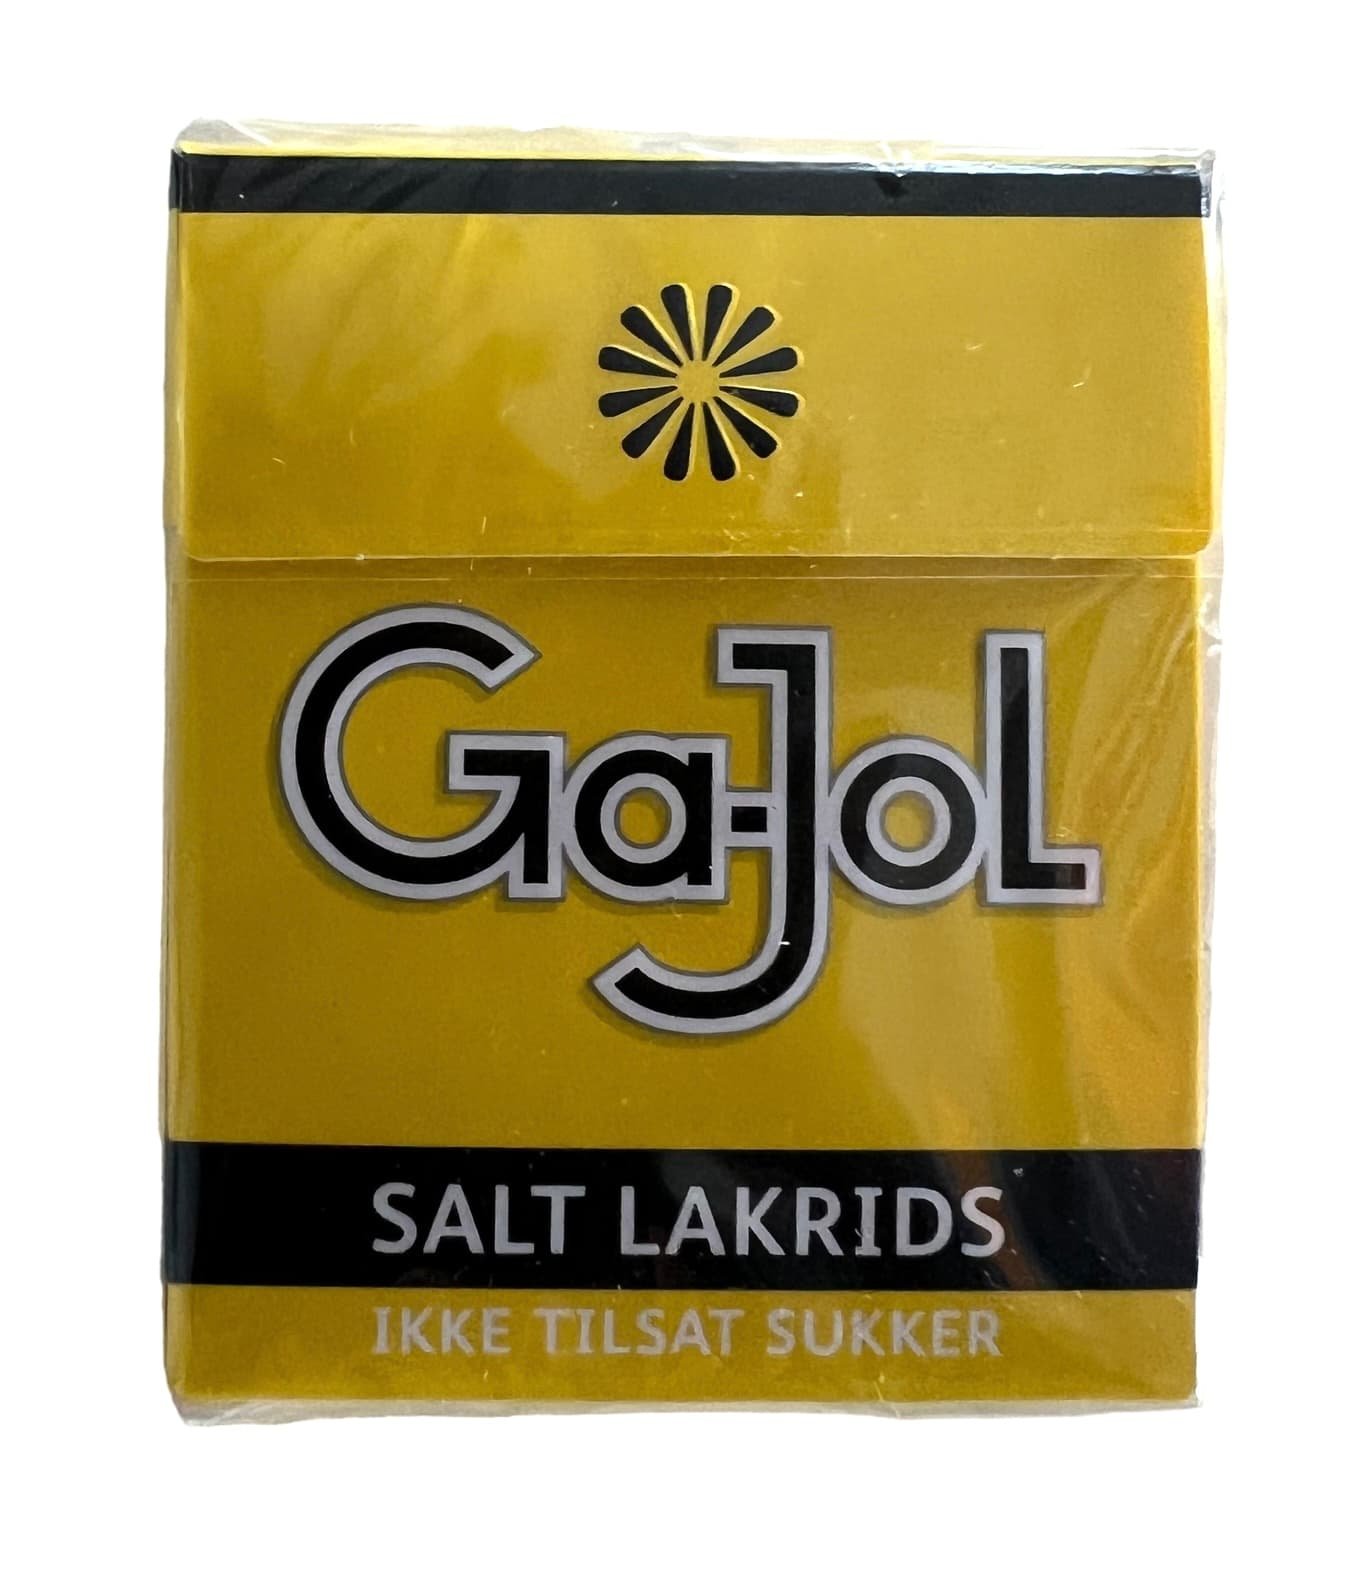 Ga-Jol salt licorice, 23g